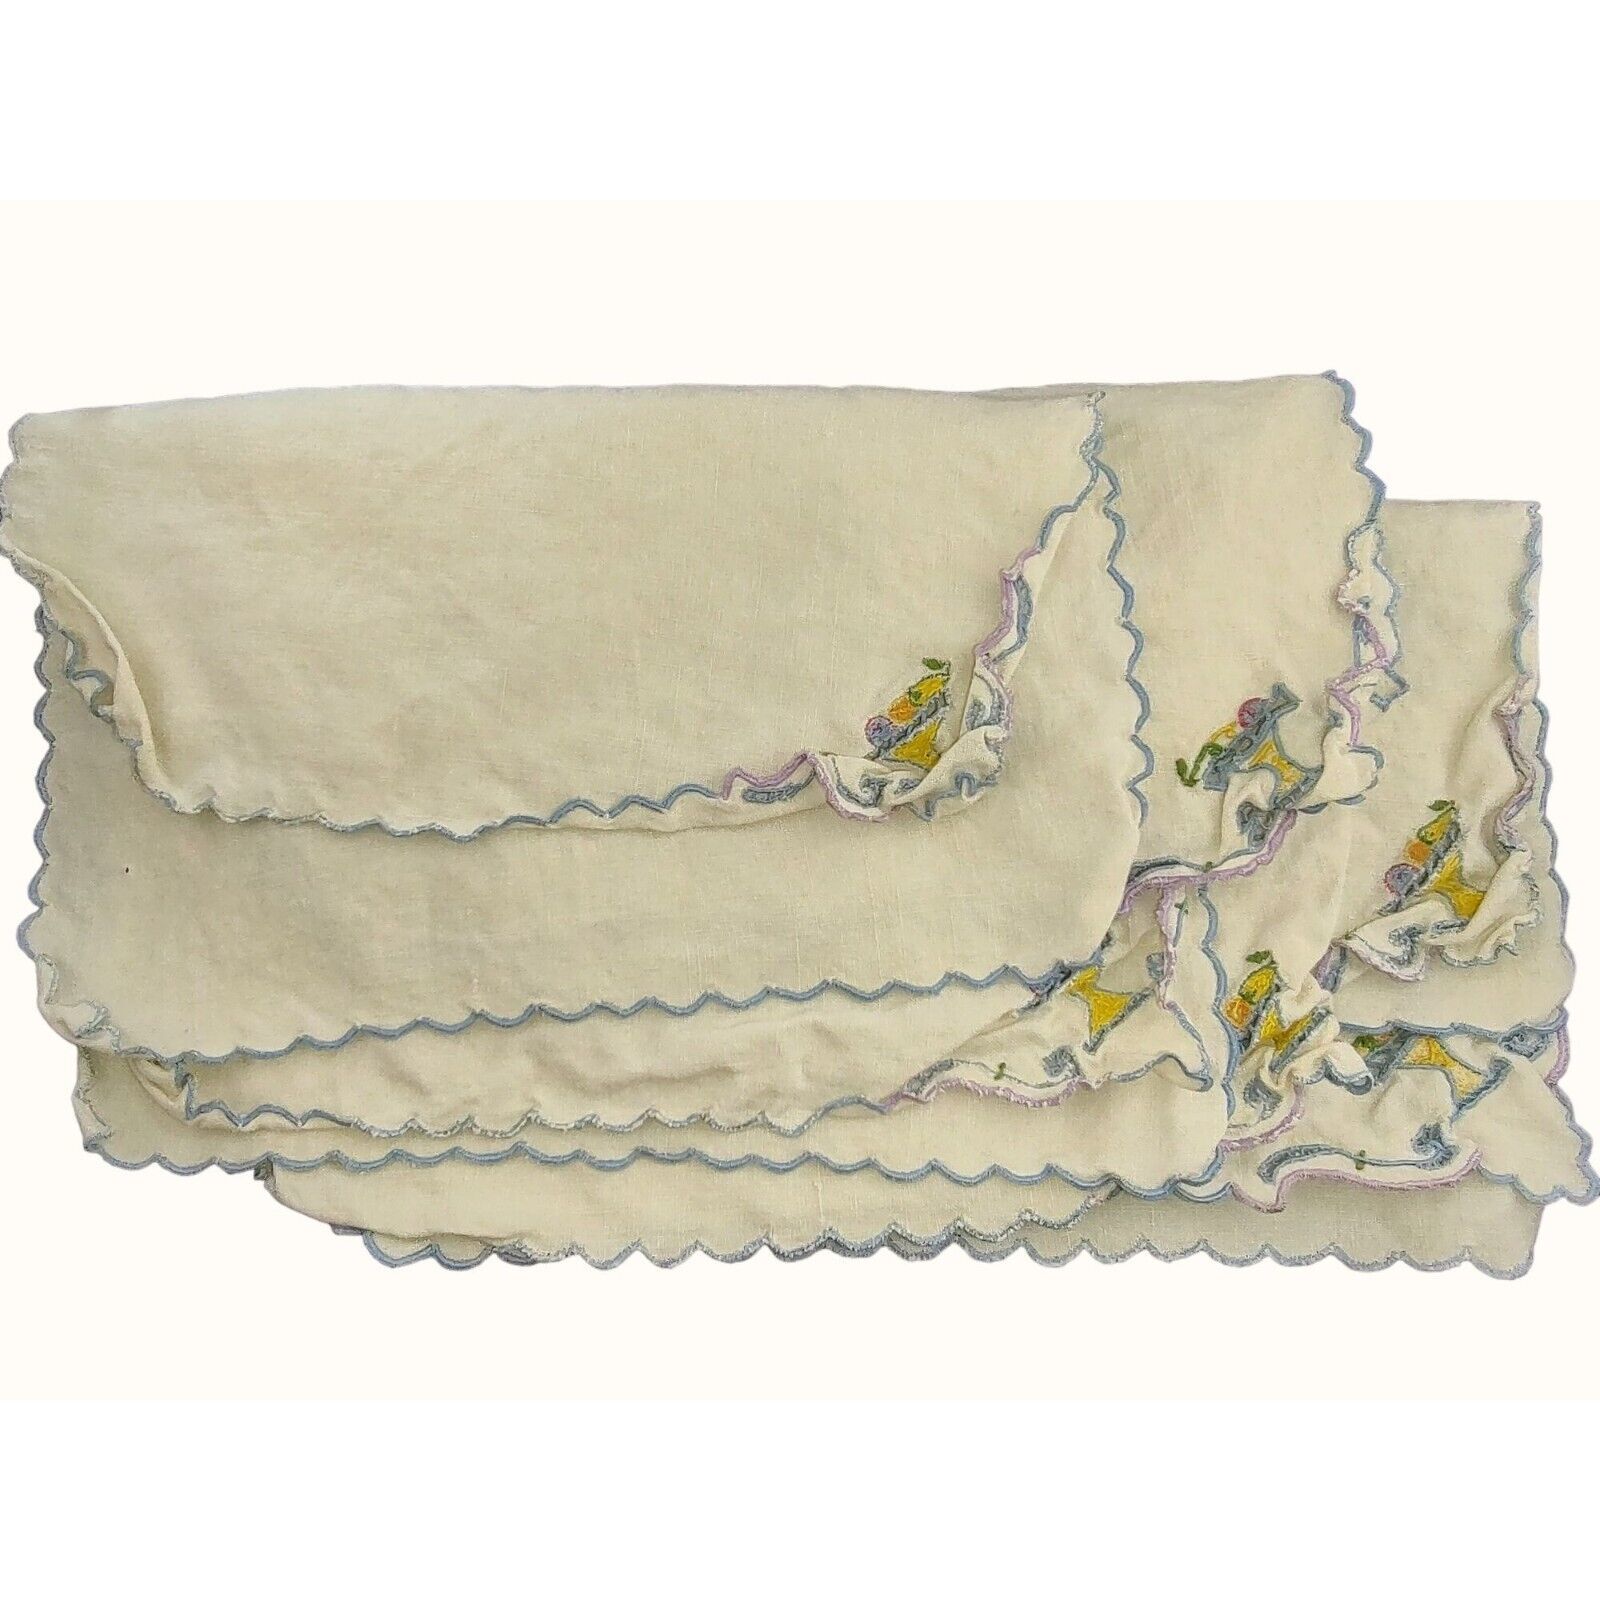 Primary image for Vintage Cloth Napkins Machine Embroidery 1960s Flower Basket Blue Trim 6 Piece